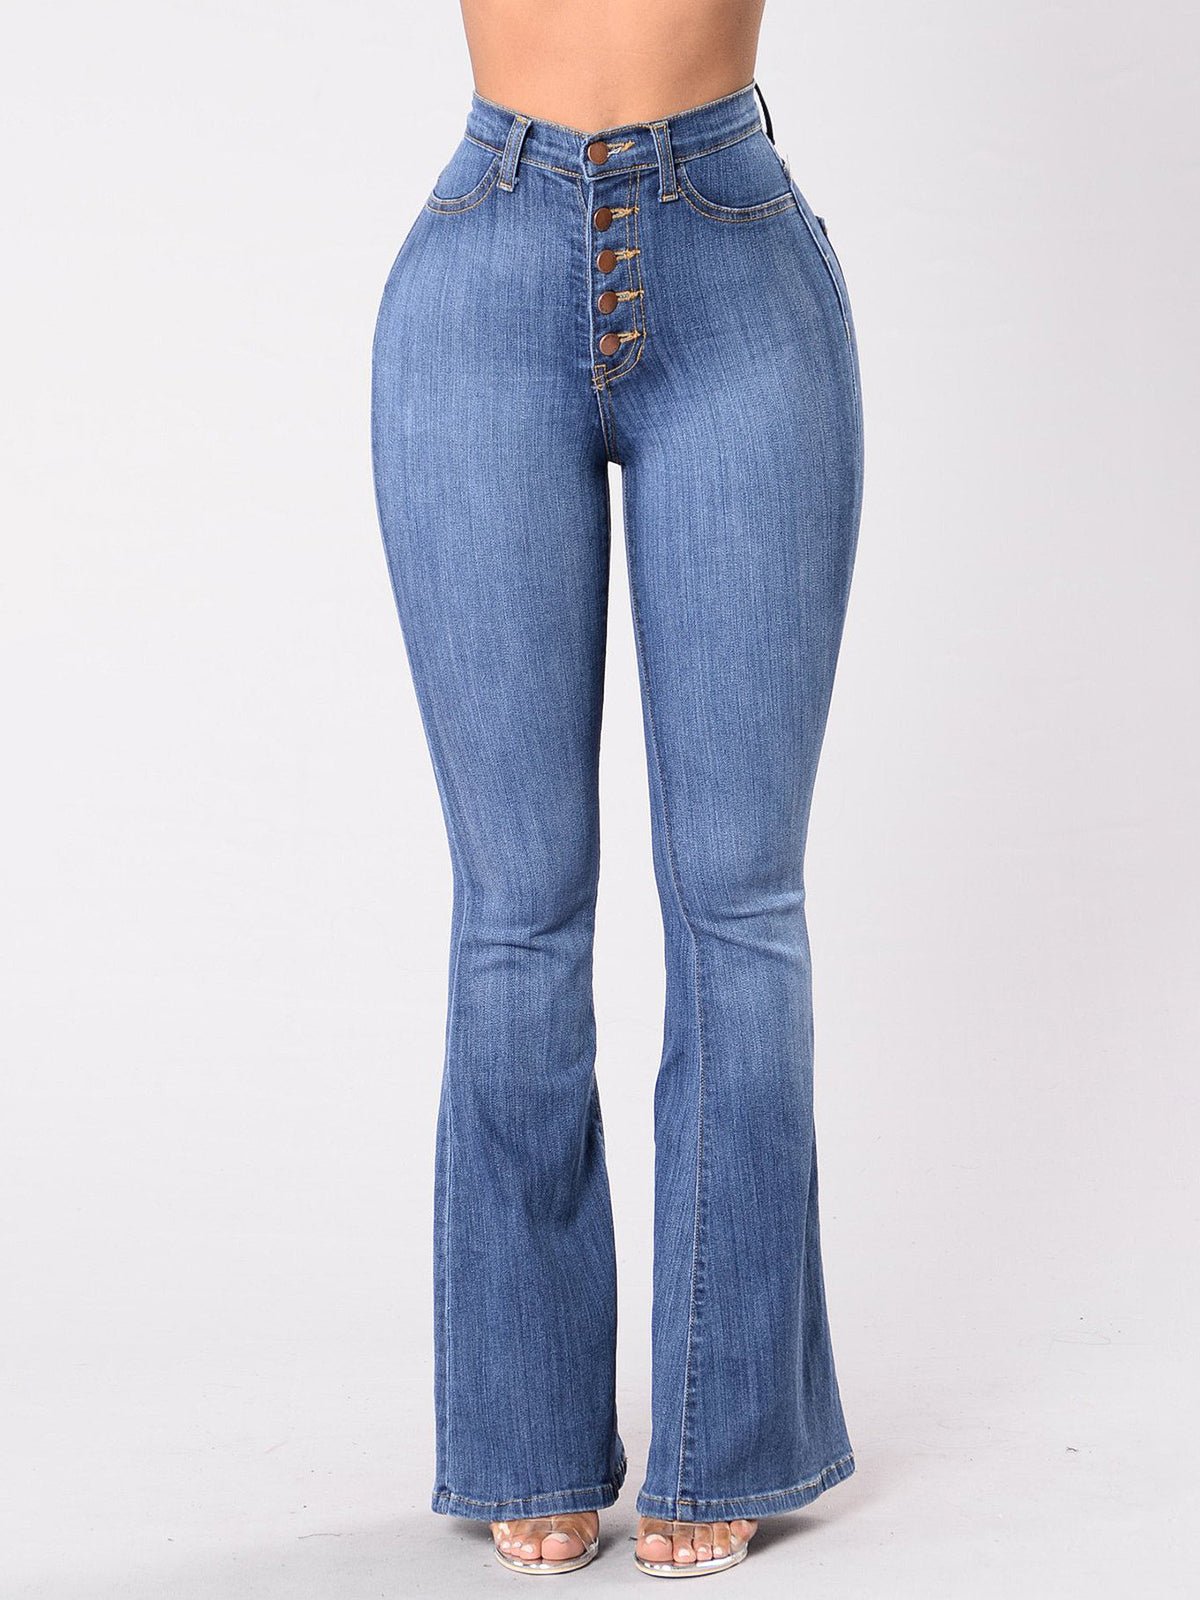 Jeans - Slim Fitting High Waist Flare Jeans - MsDressly